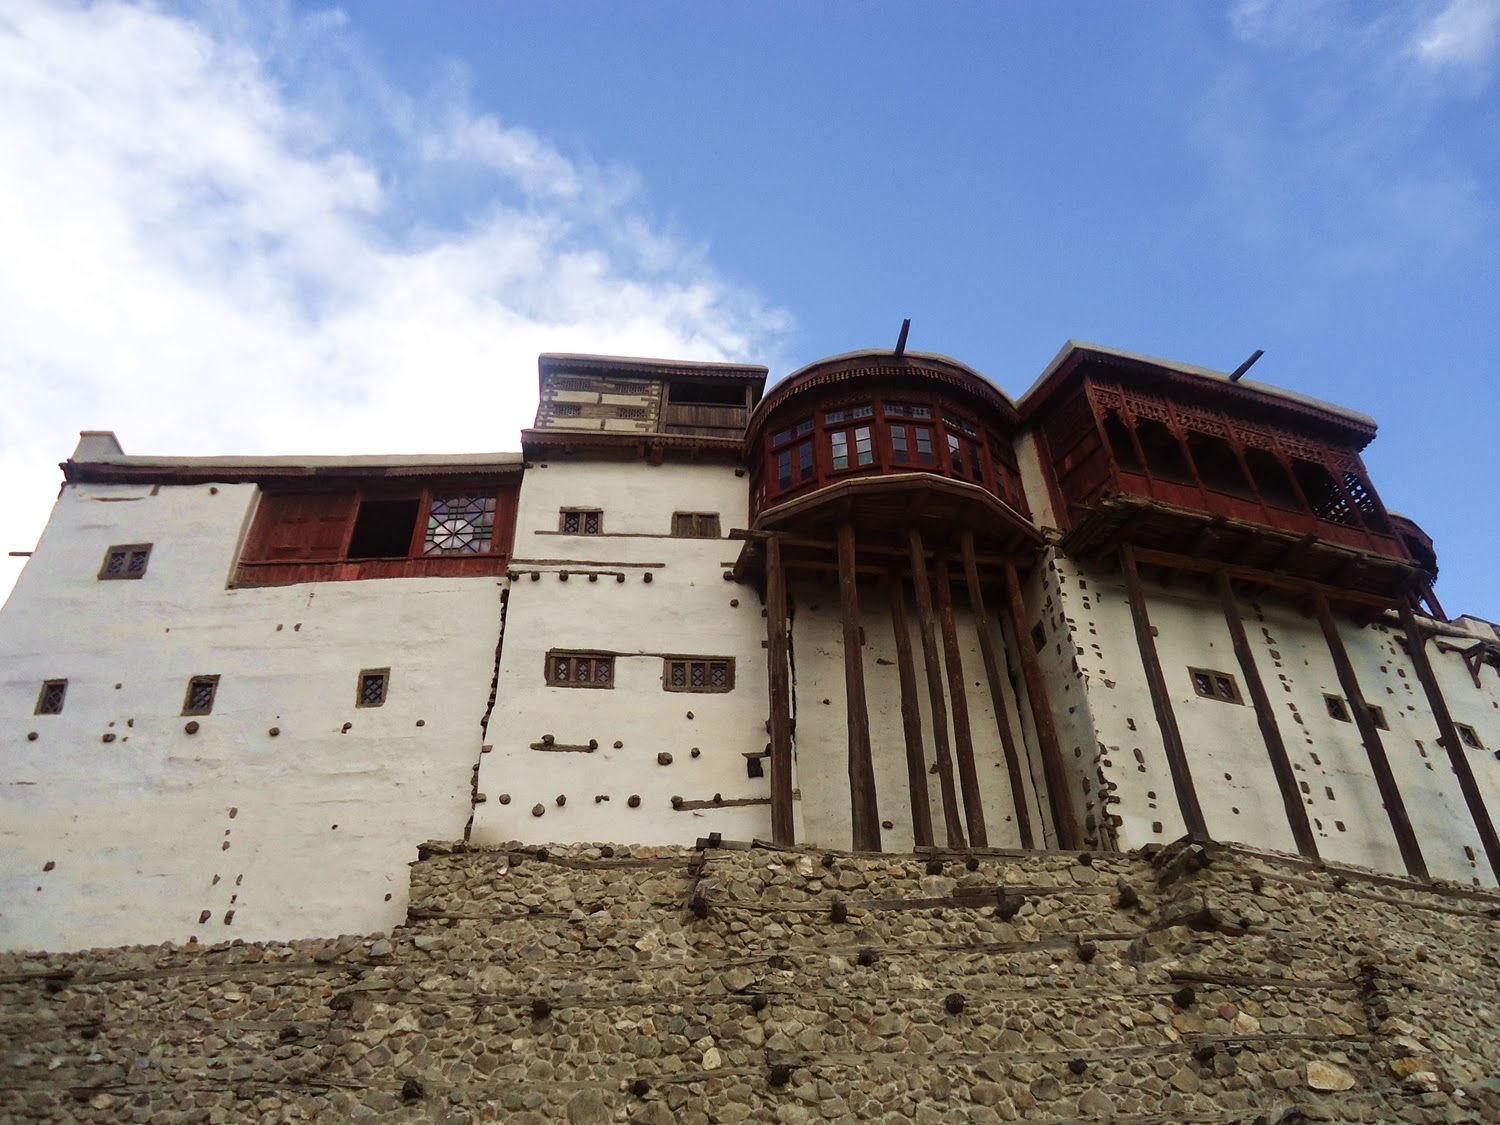 Baltit Fort, Hunza Valley (www.prettygloss.blogspot.com)